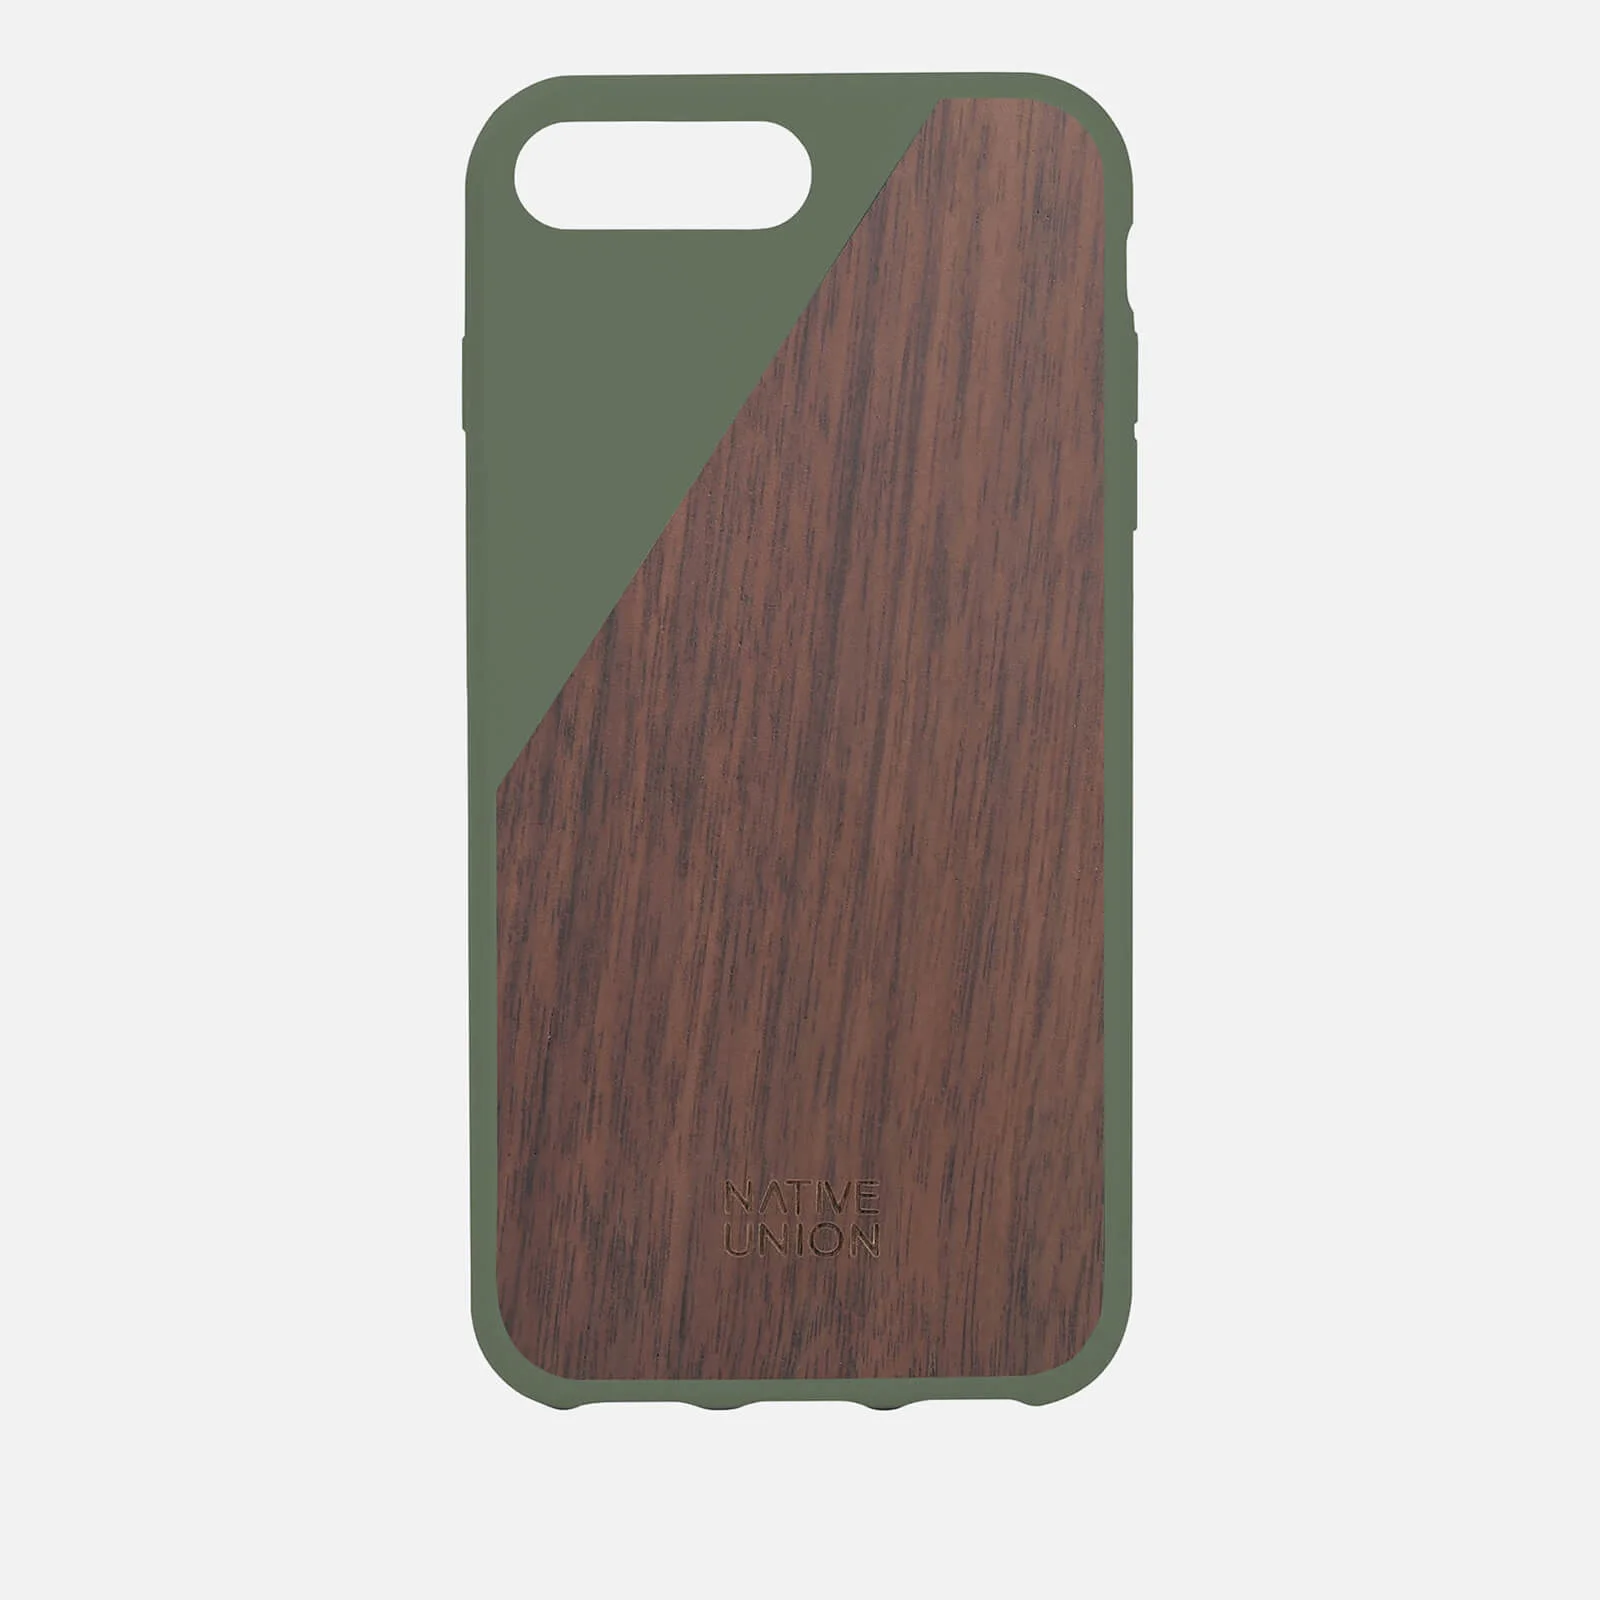 Native Union Clic Wooden iPhone 7 Plus Case - Olive Image 1